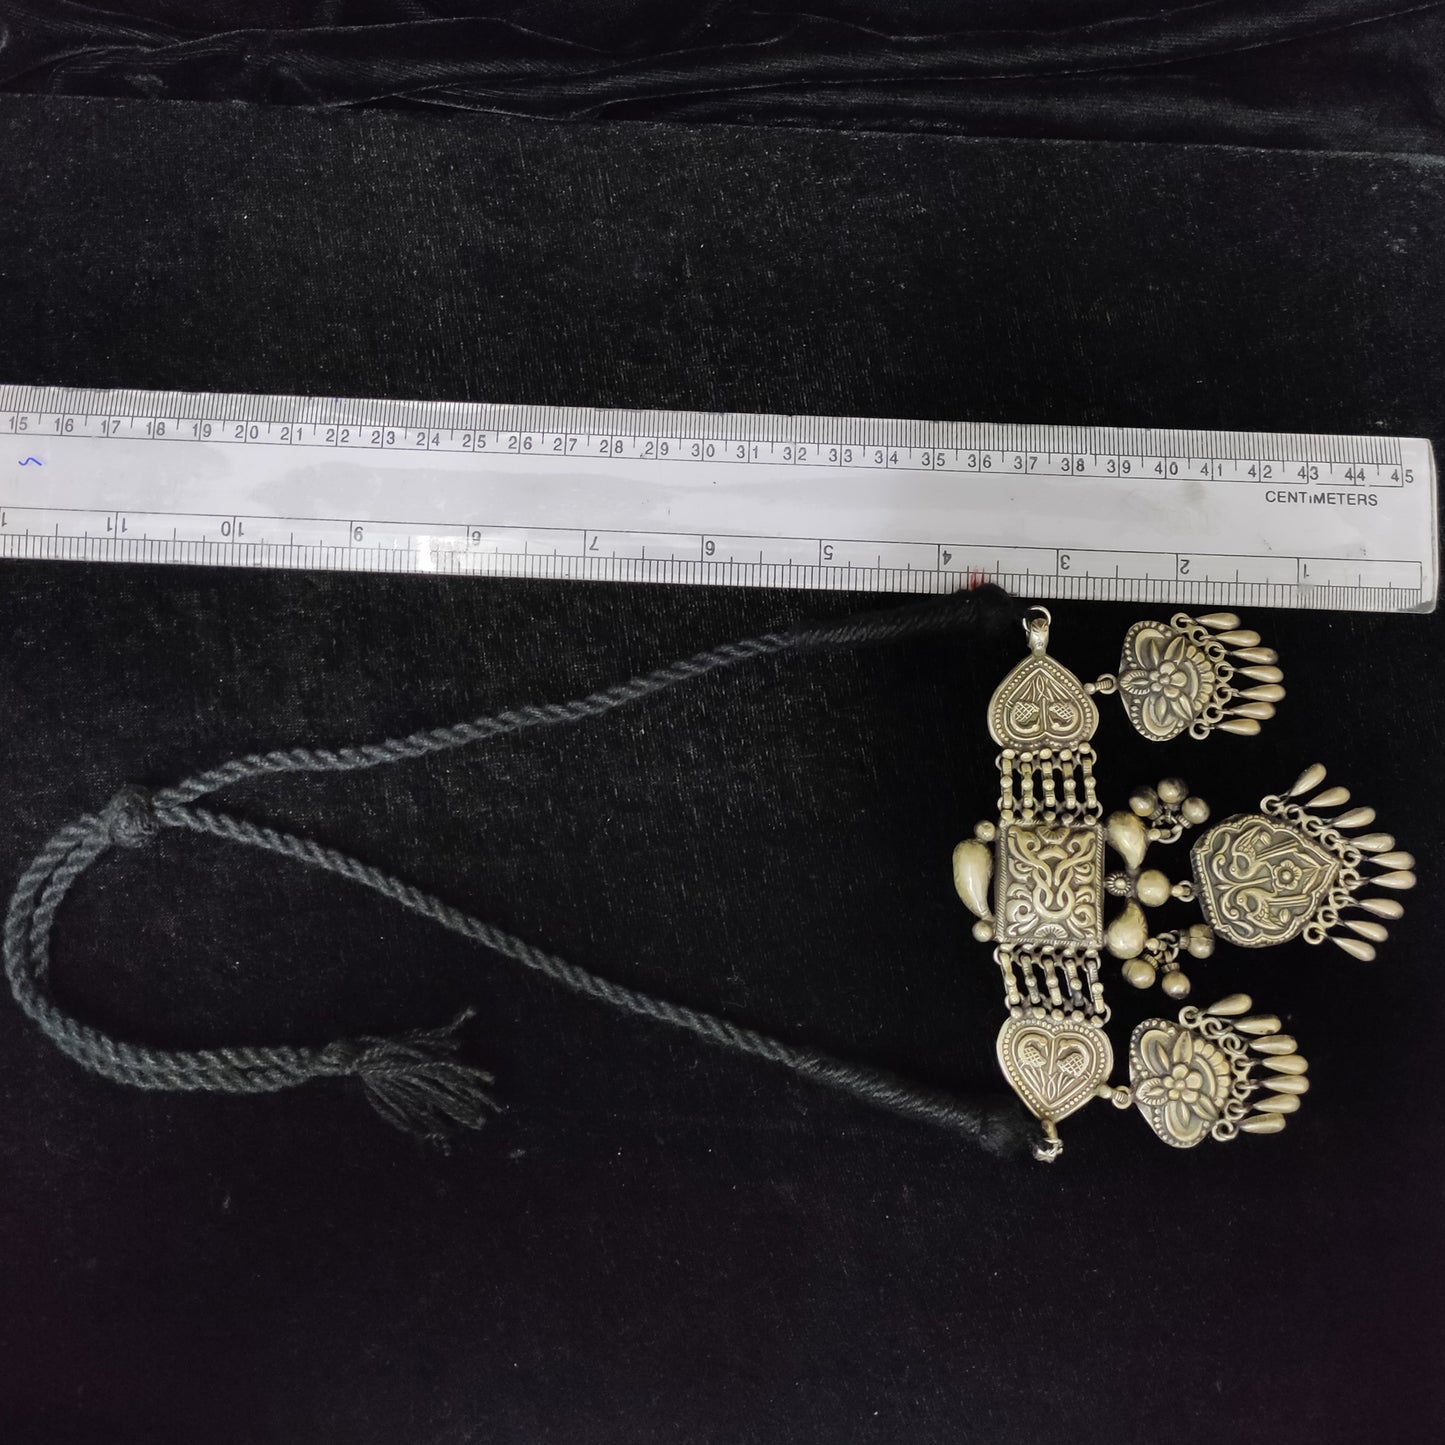 Banjara Tribal 925 Silver Handmade Necklace